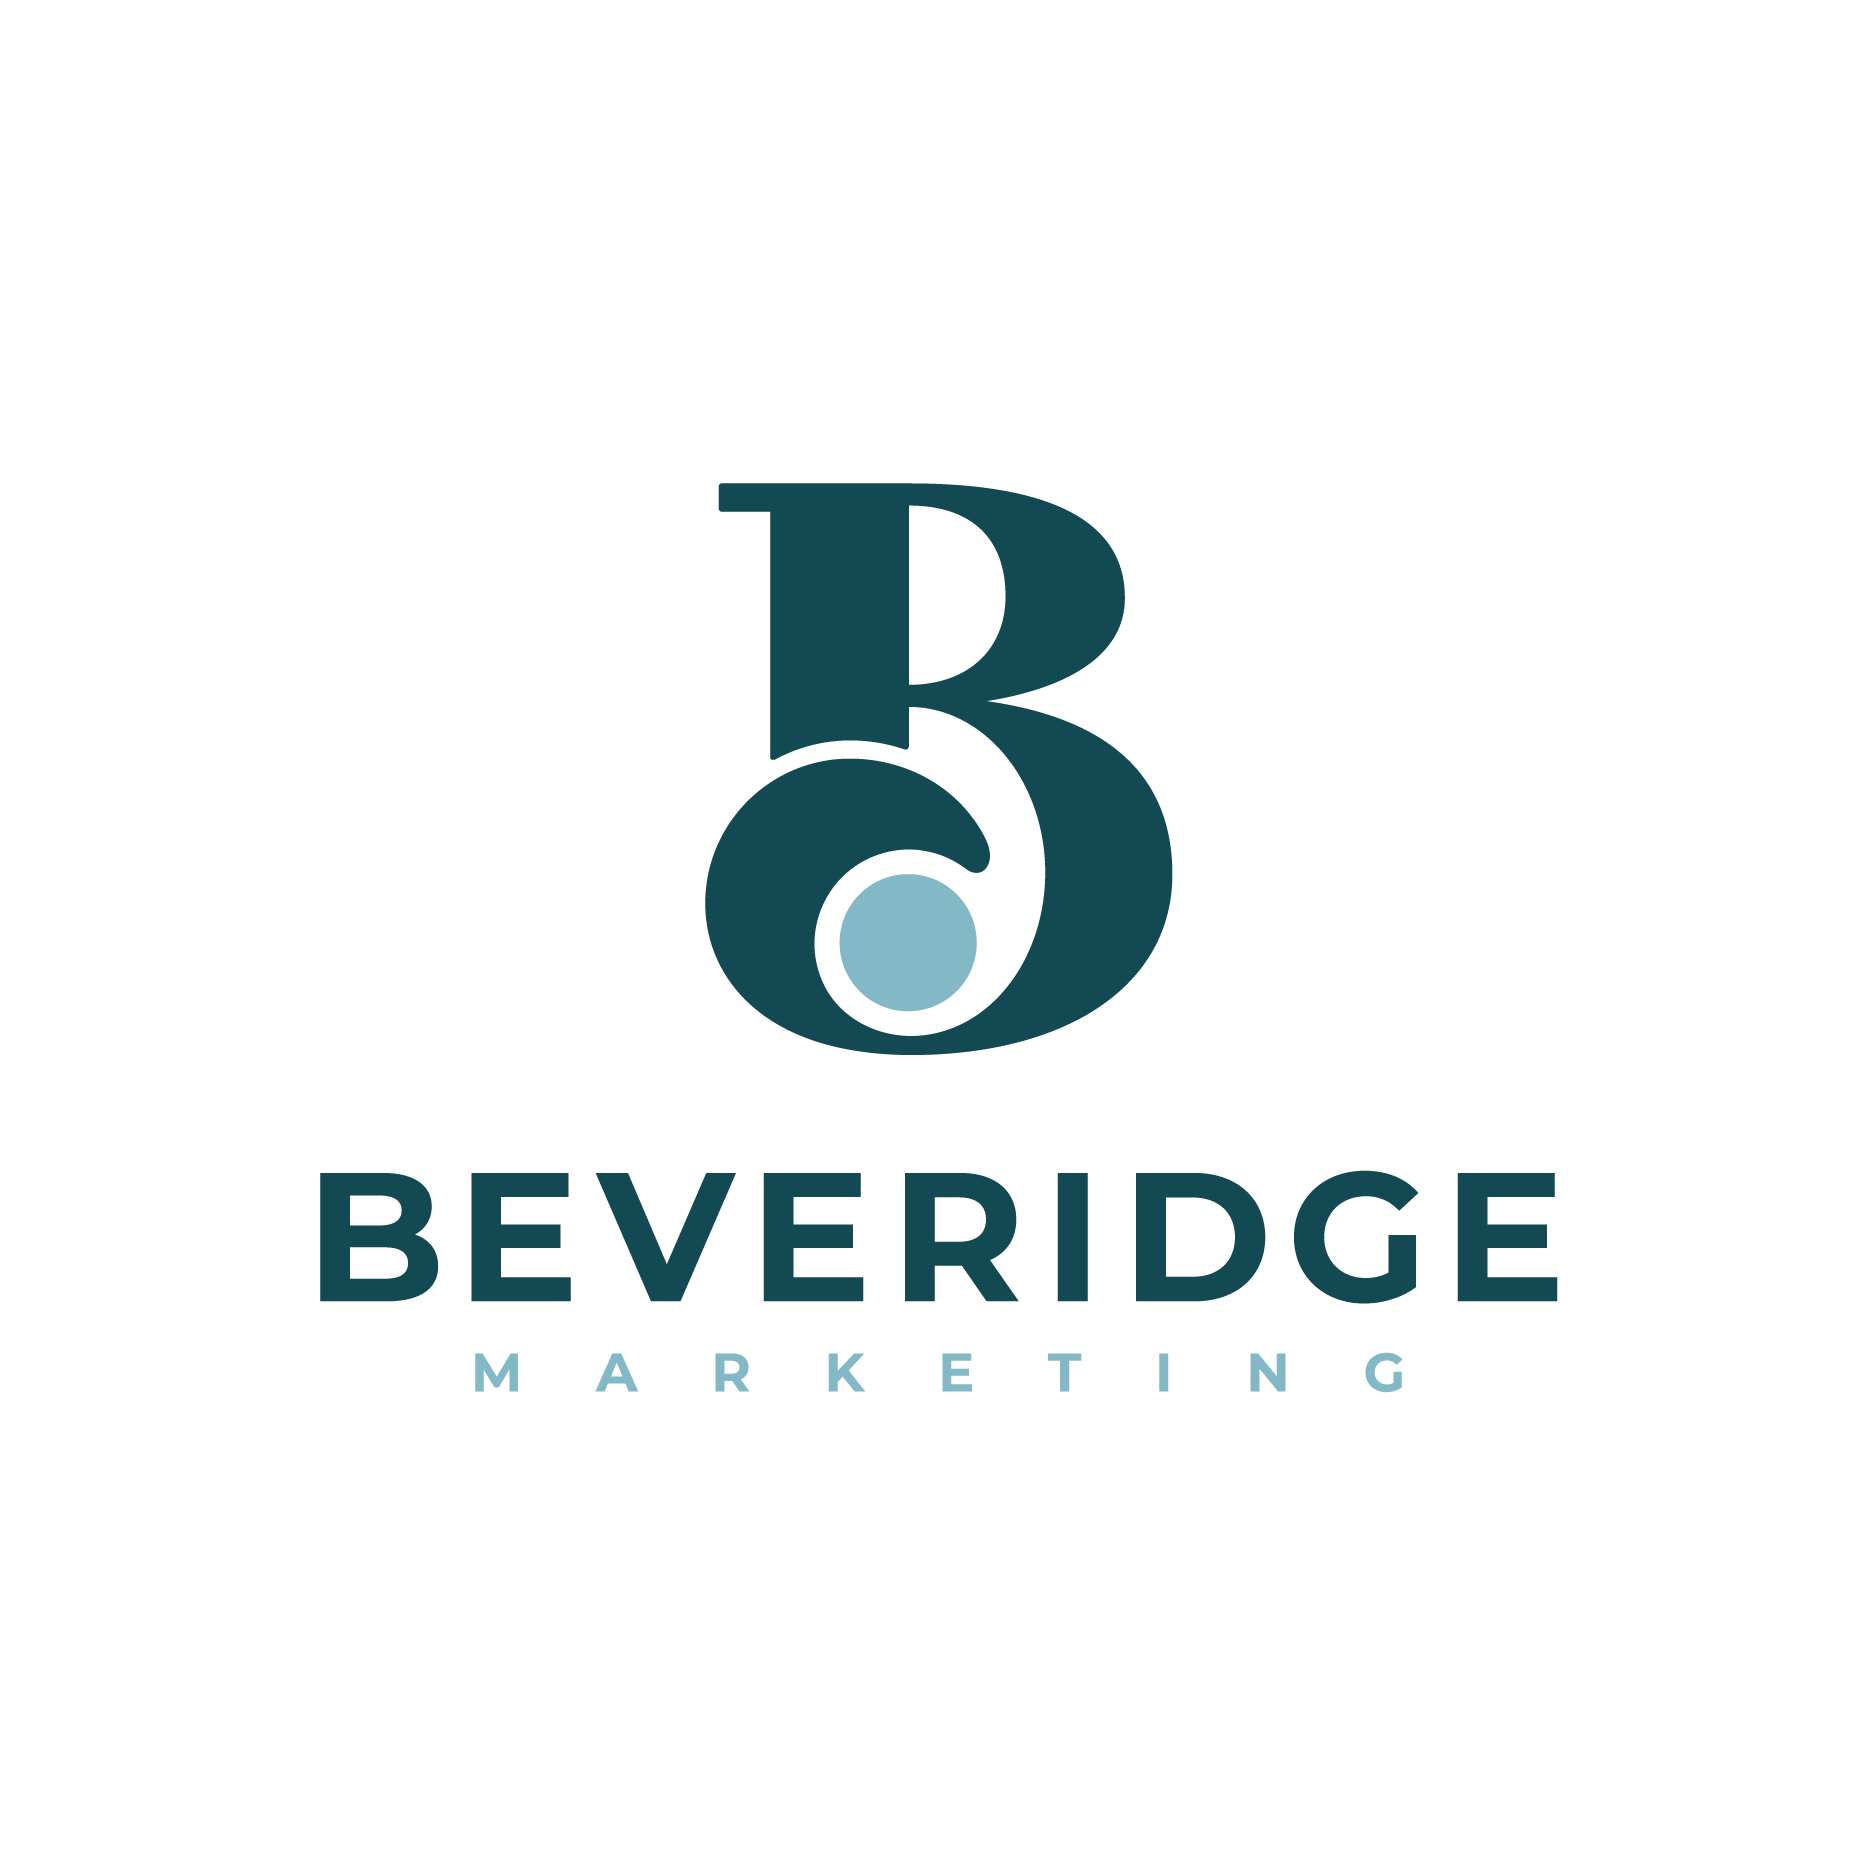 Beveridge Marketing